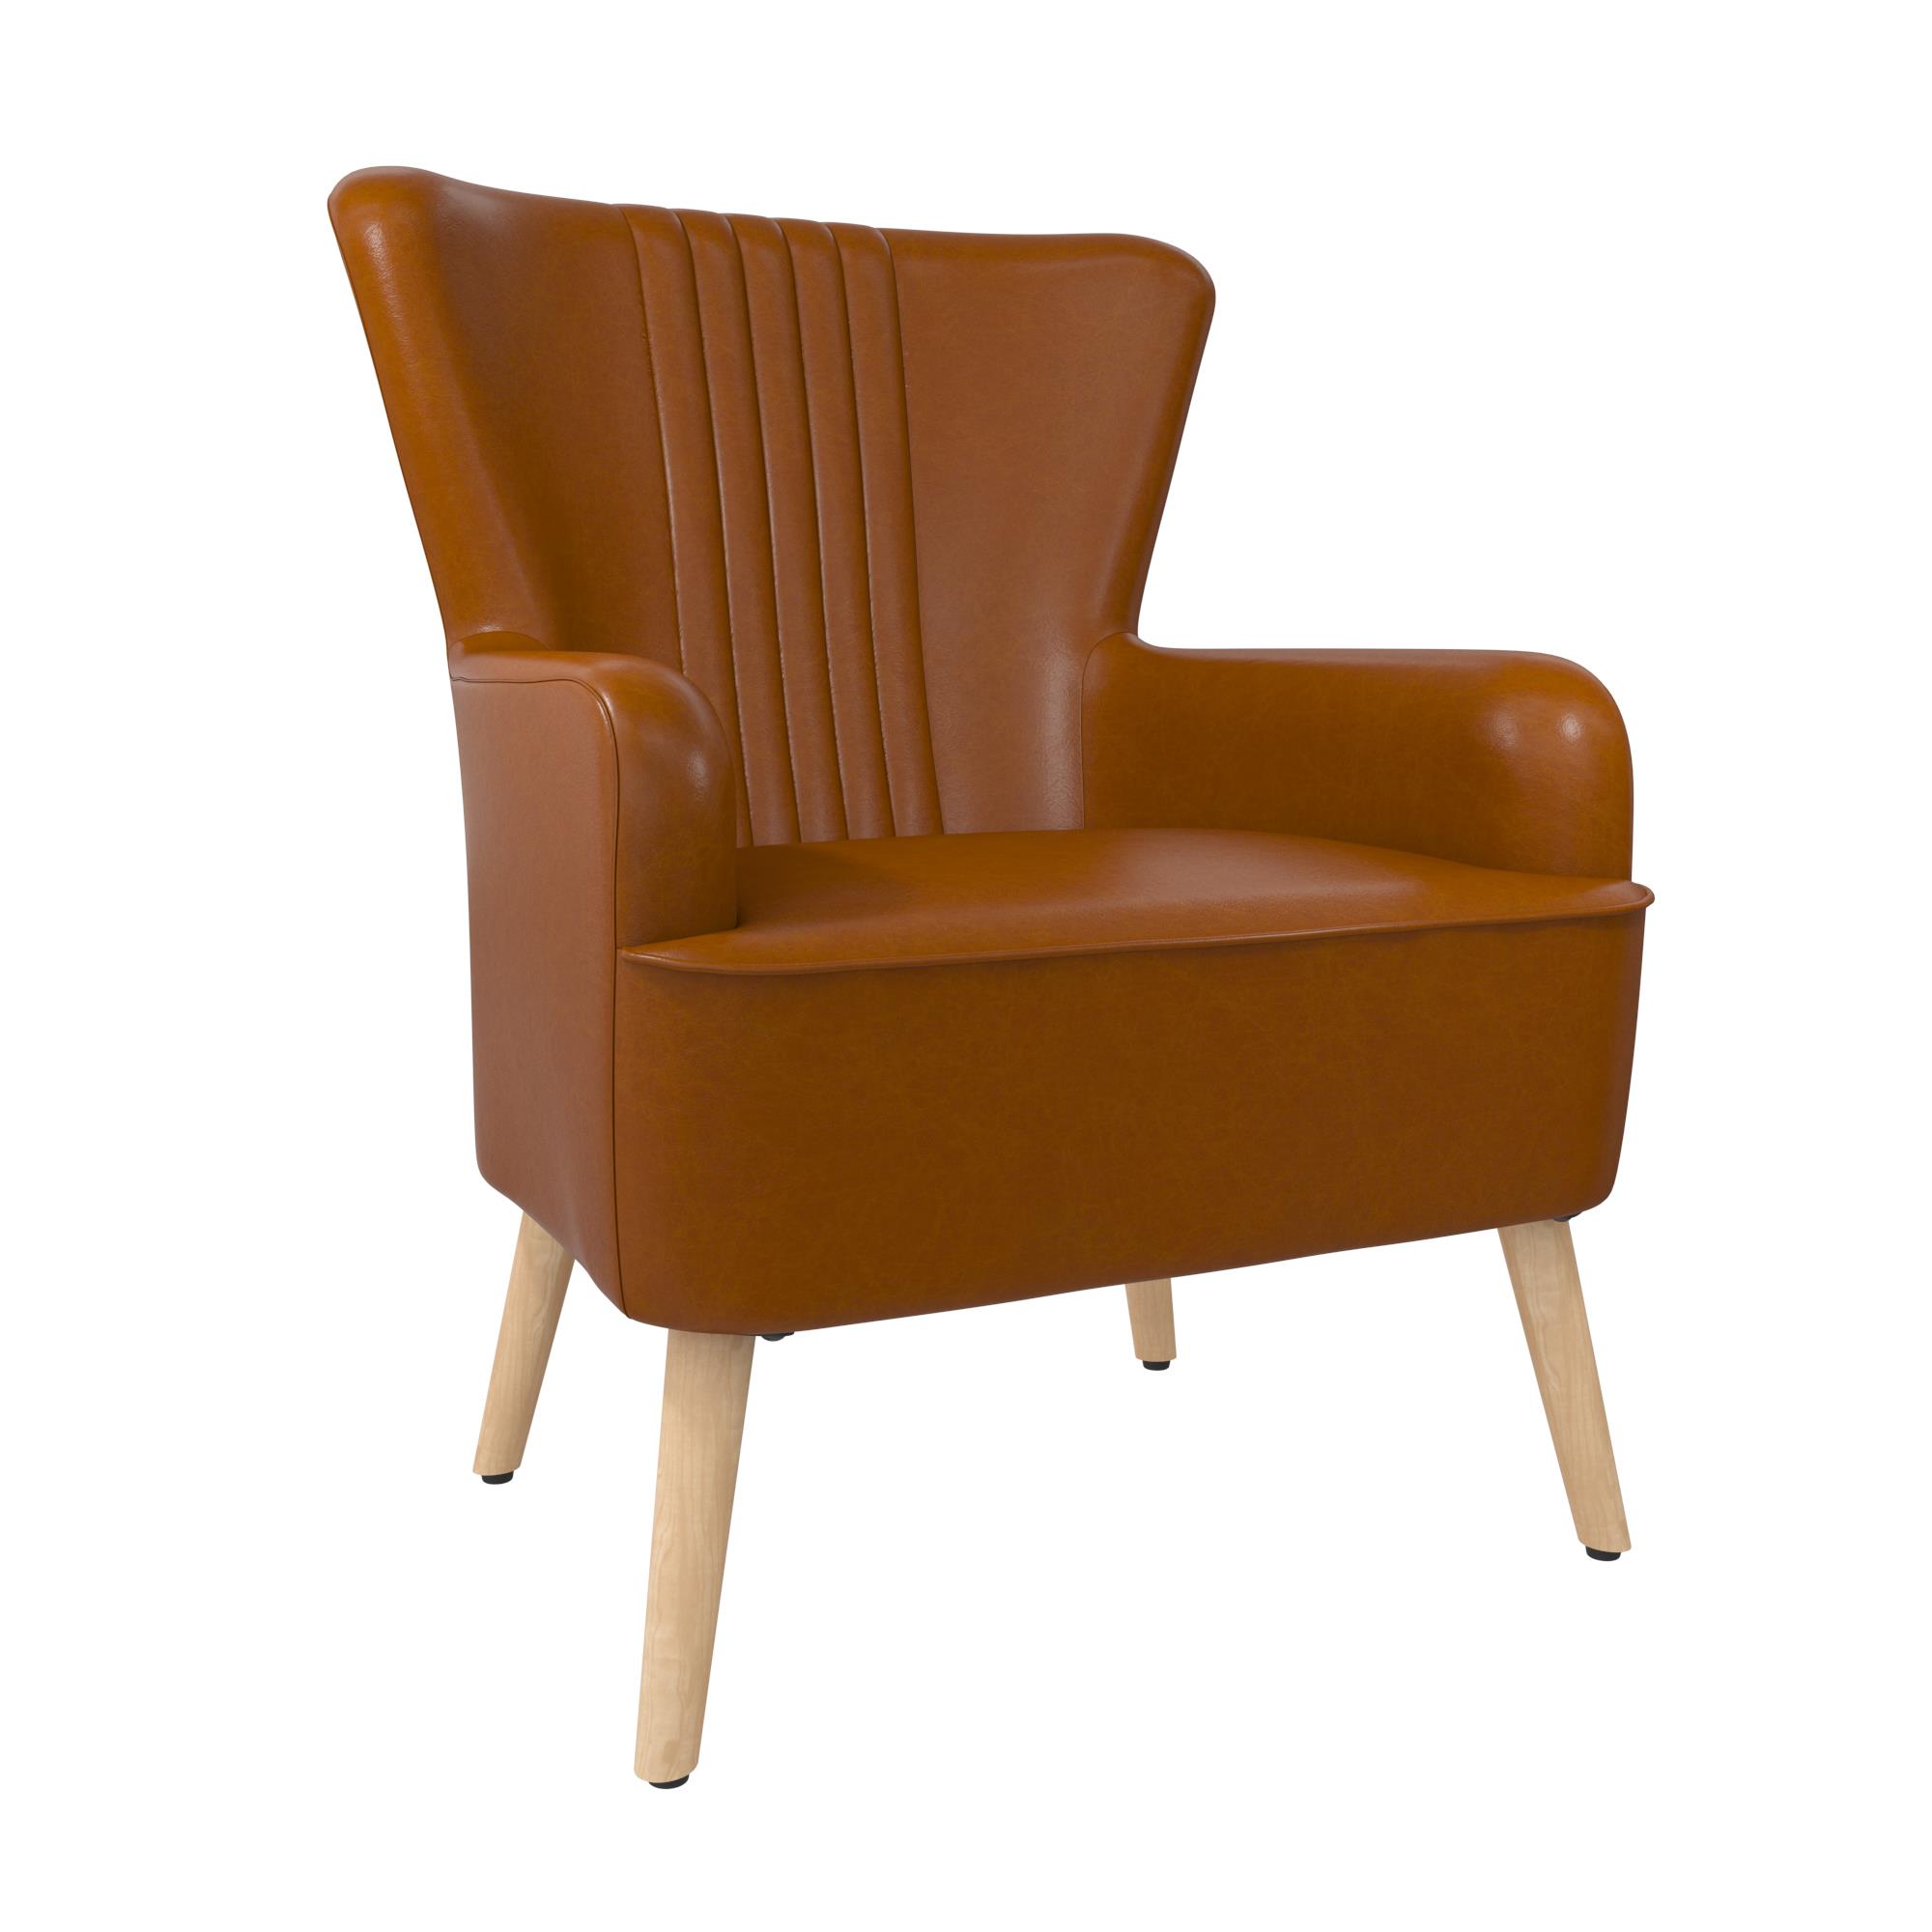 Novogratz William Accent Chair, Camel Faux Leather - image 3 of 15